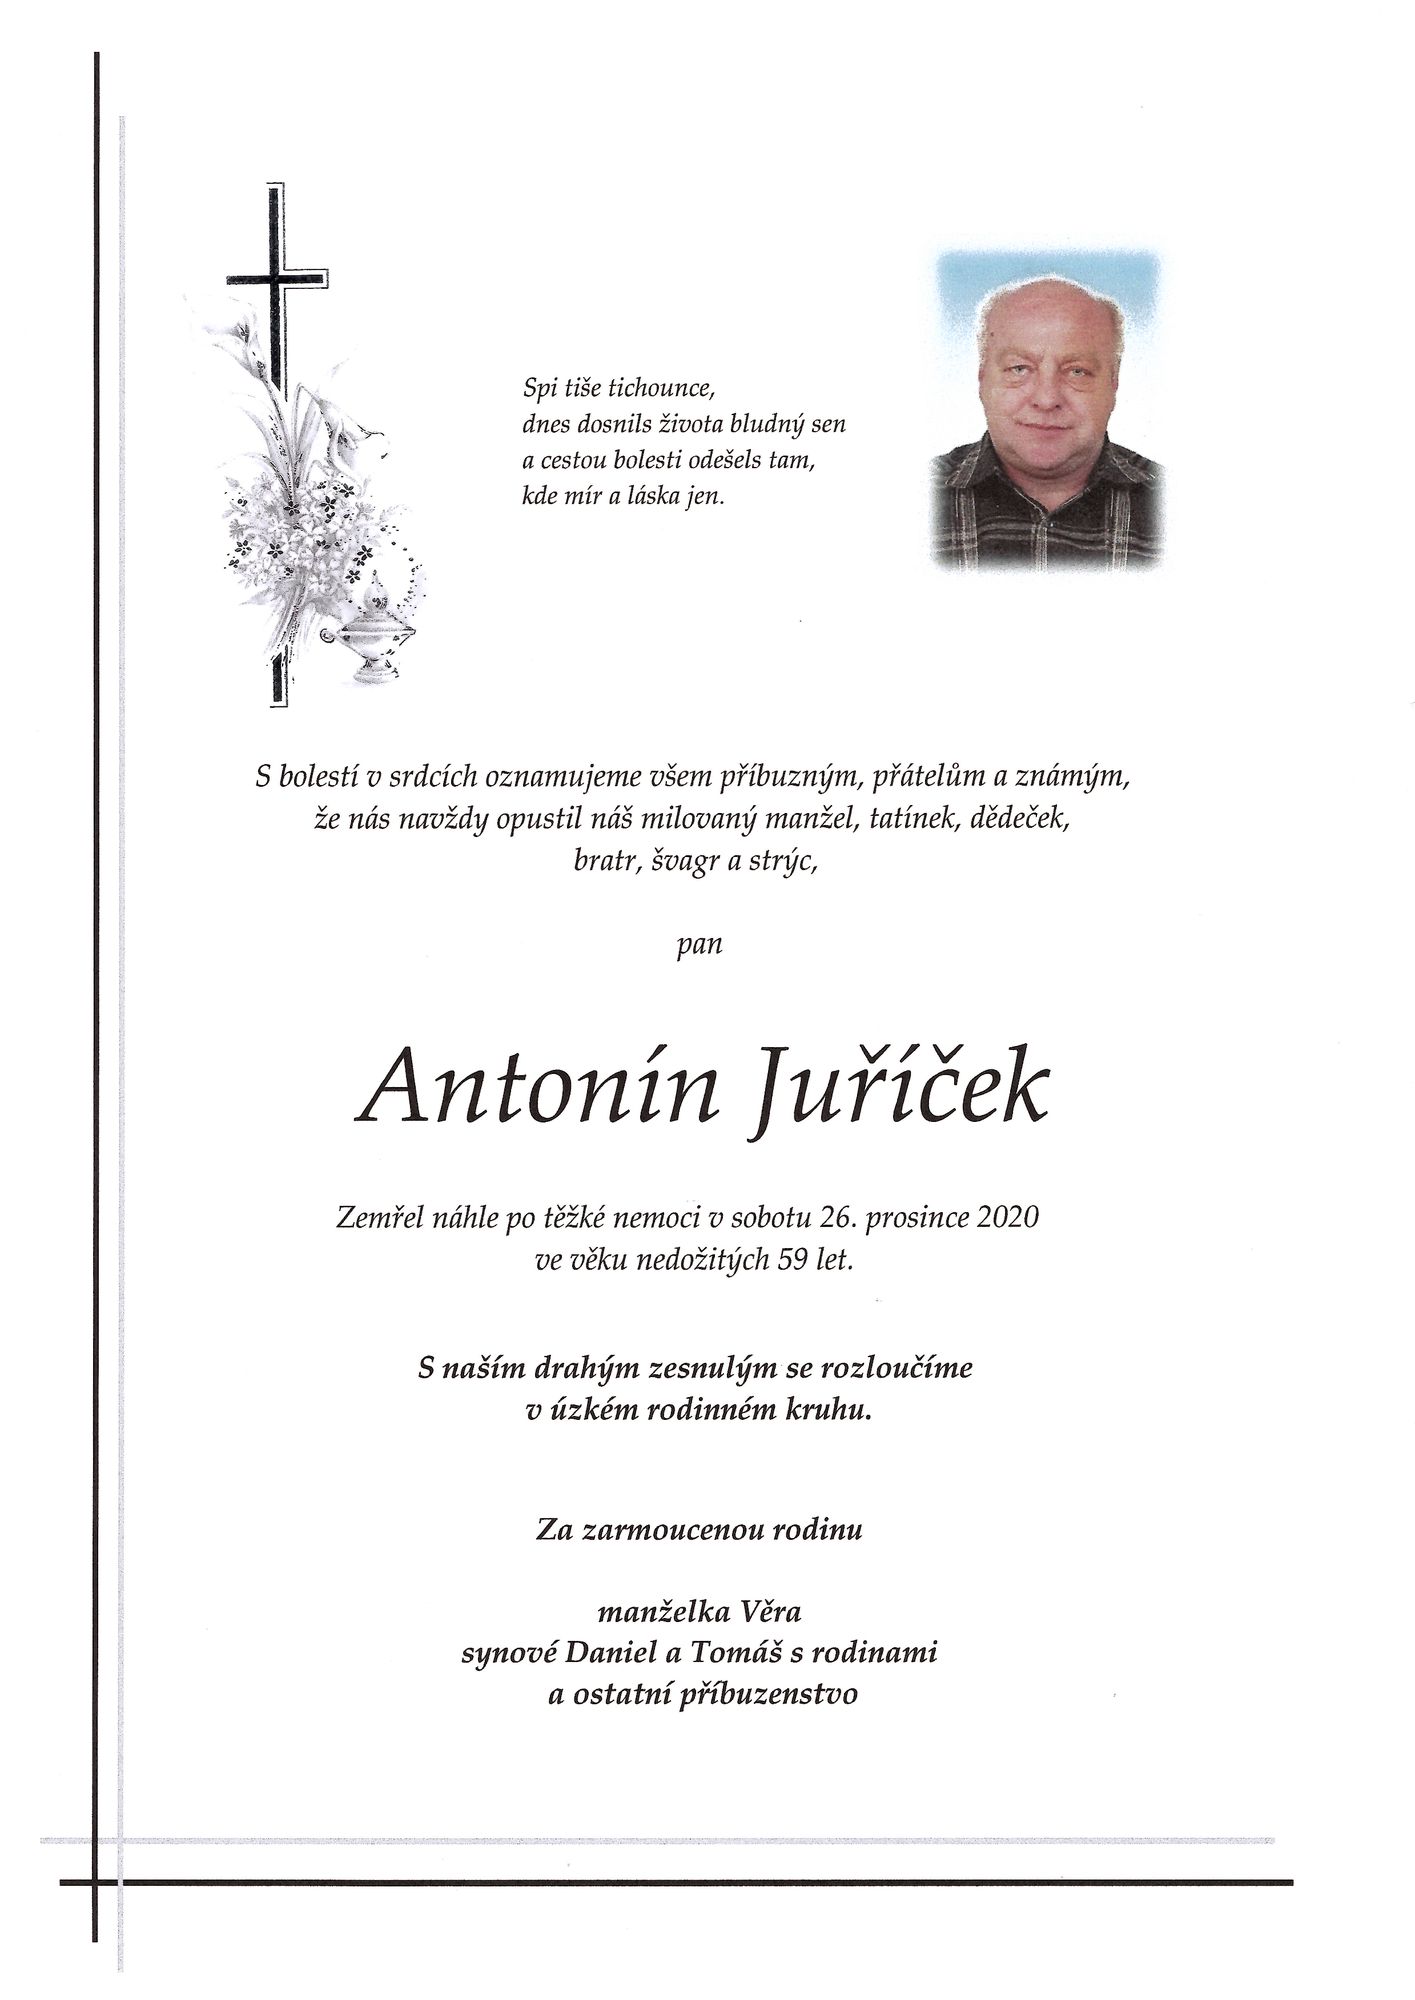 Antonín Juříček